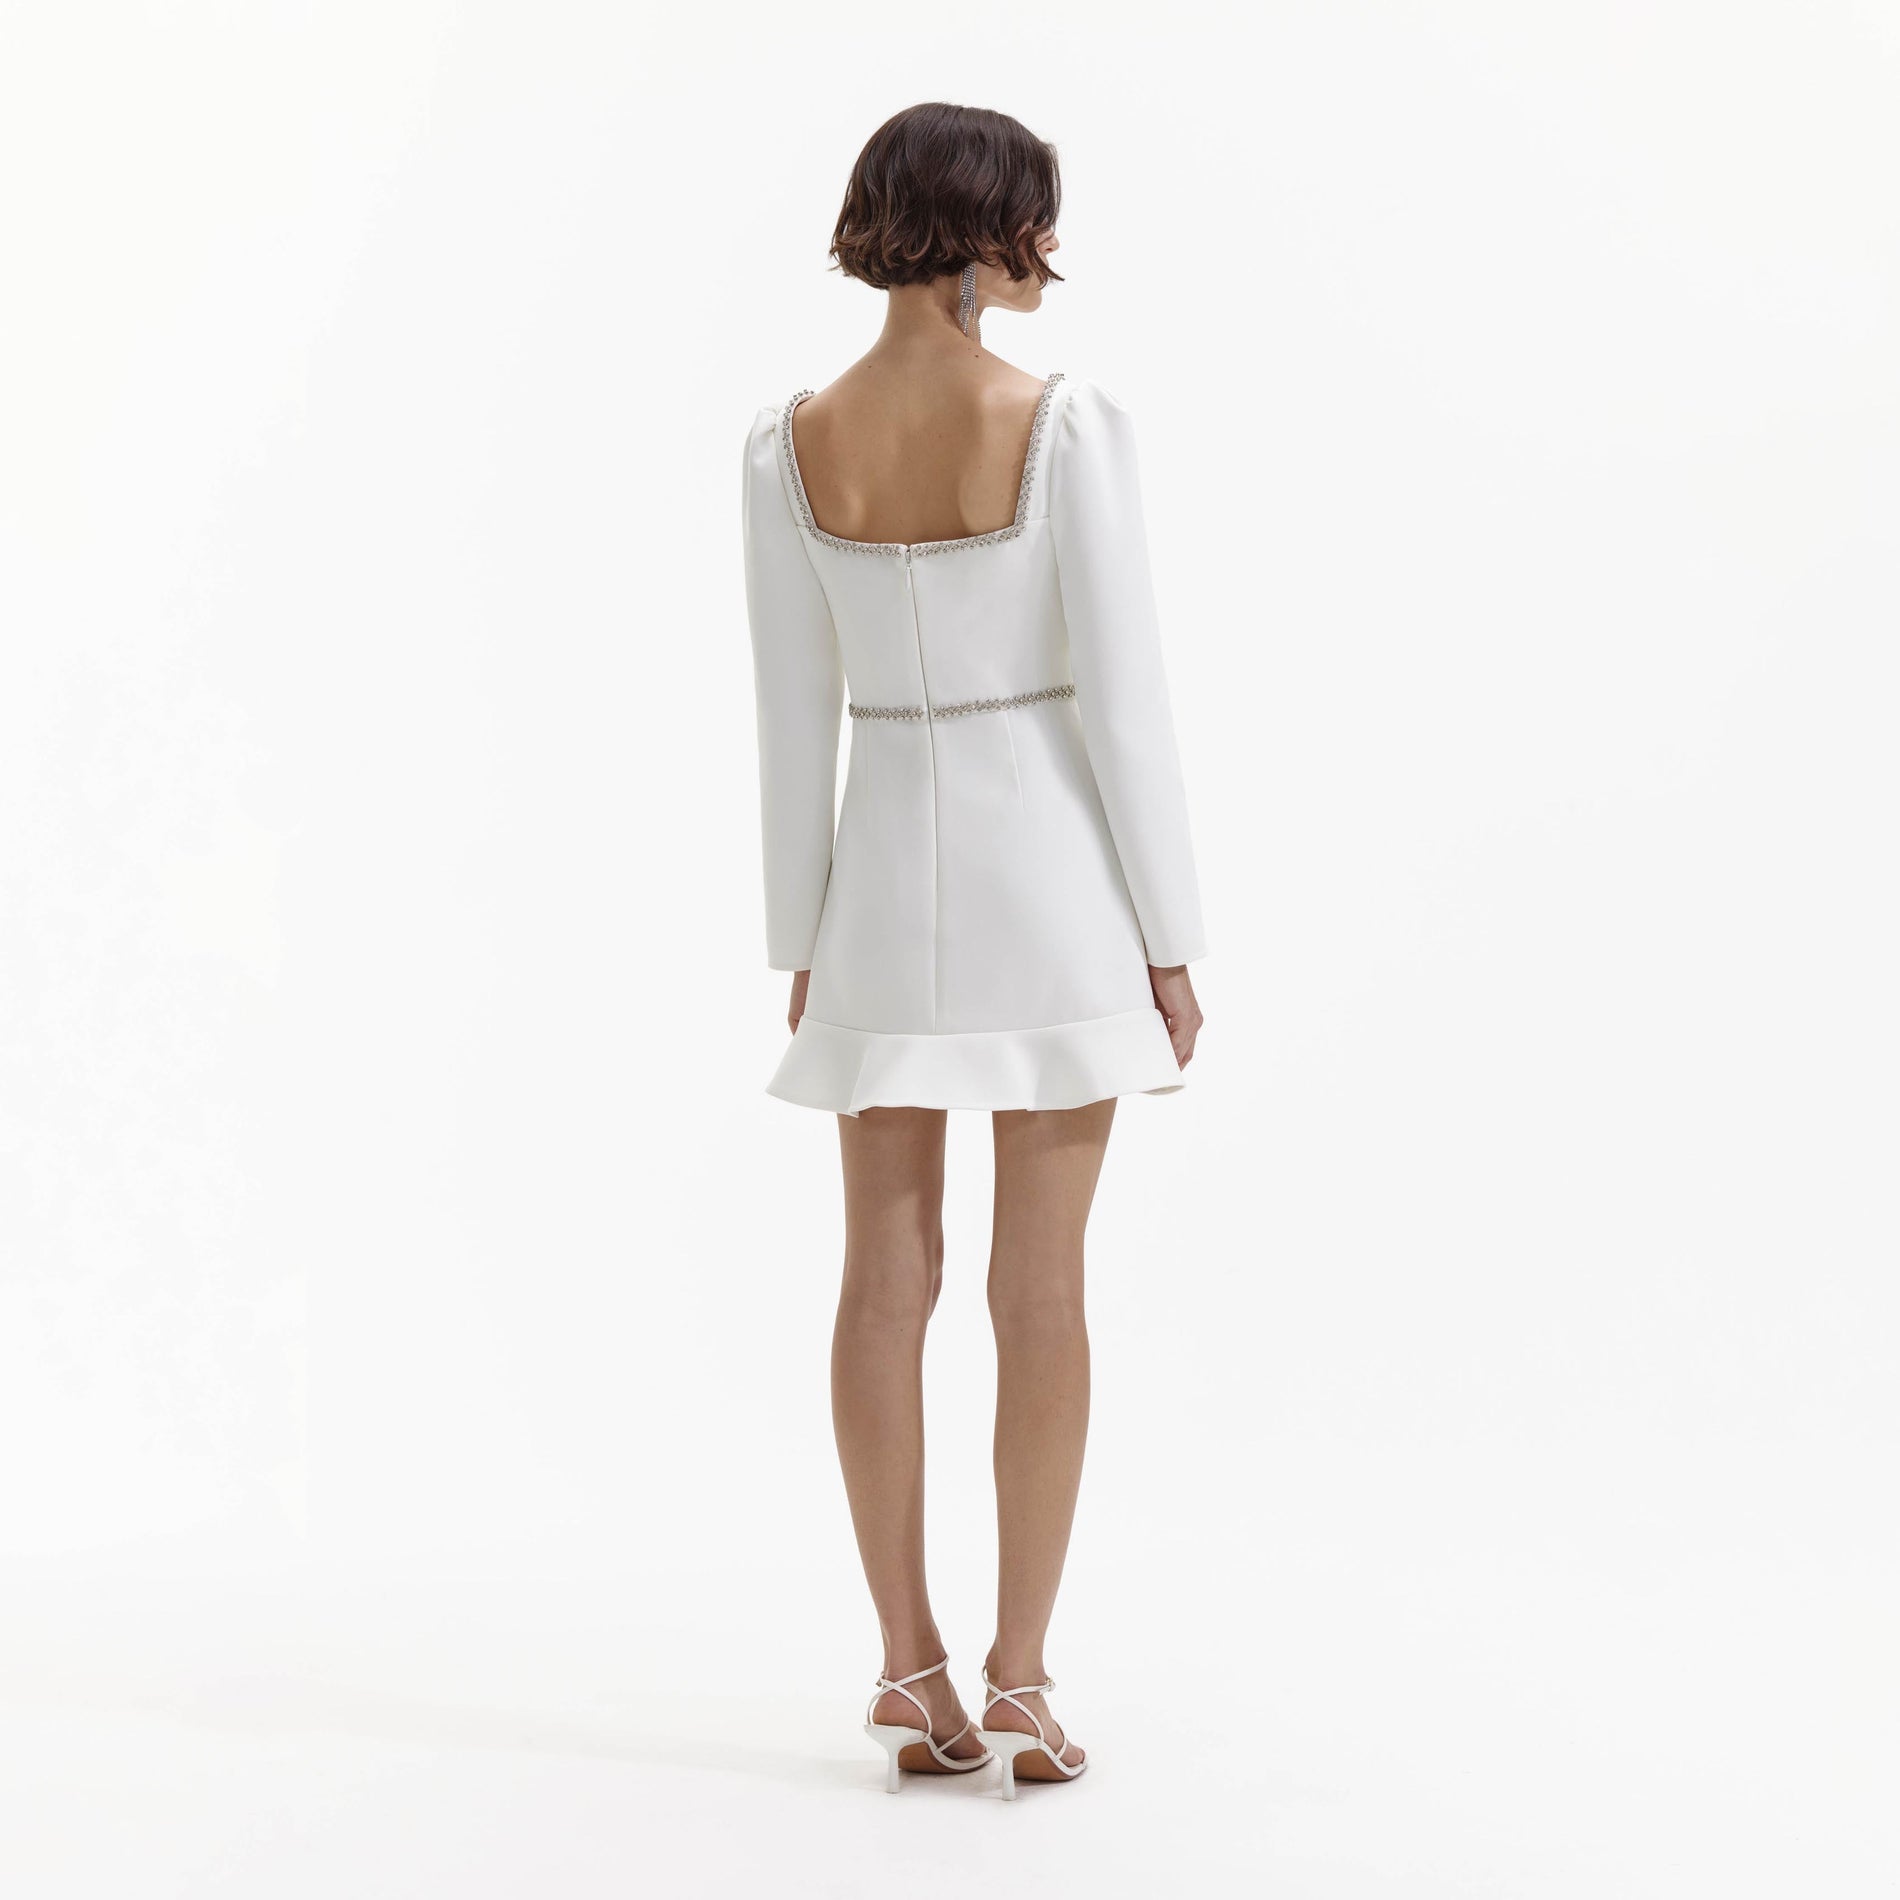 A Woman wearing the White Bonded Crepe Long Sleeve Mini Dress